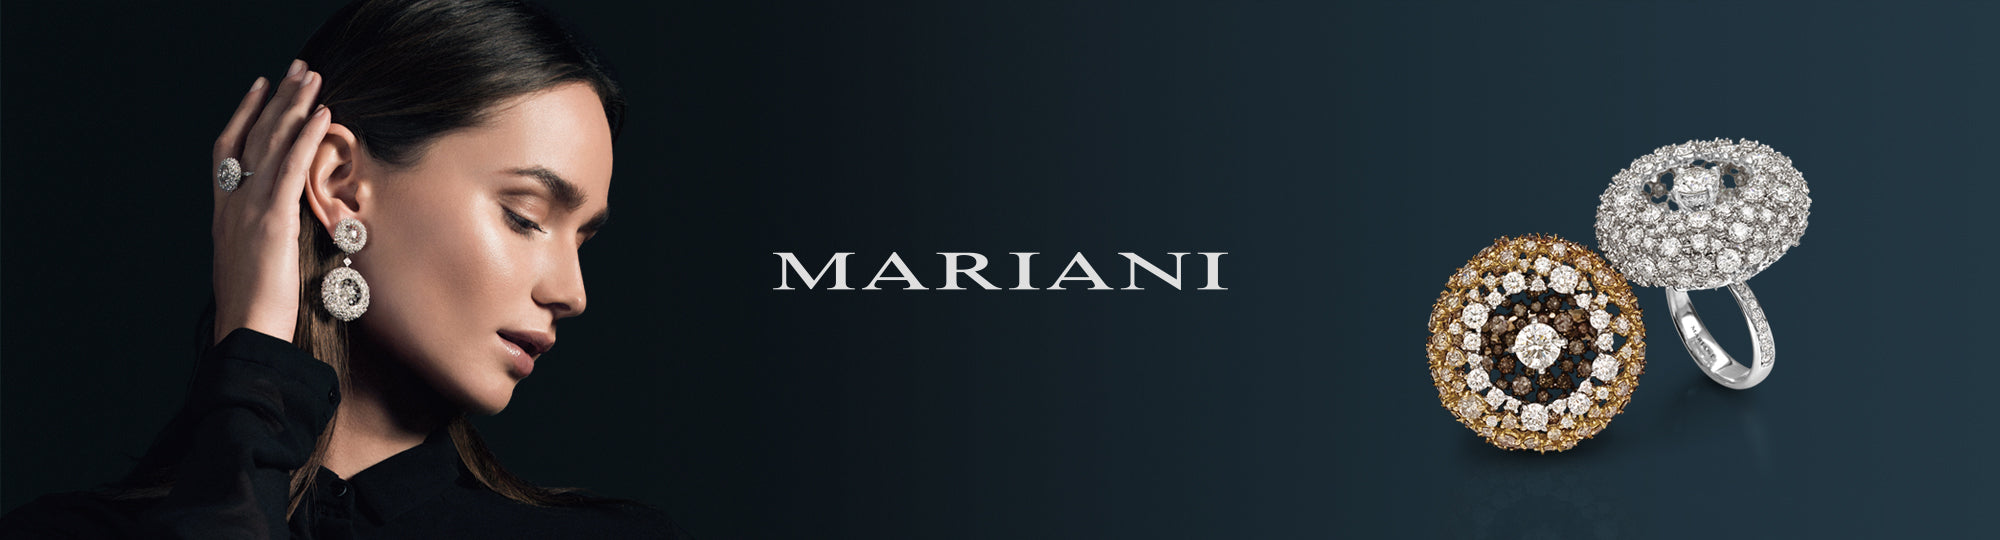  Mariani Manfredi